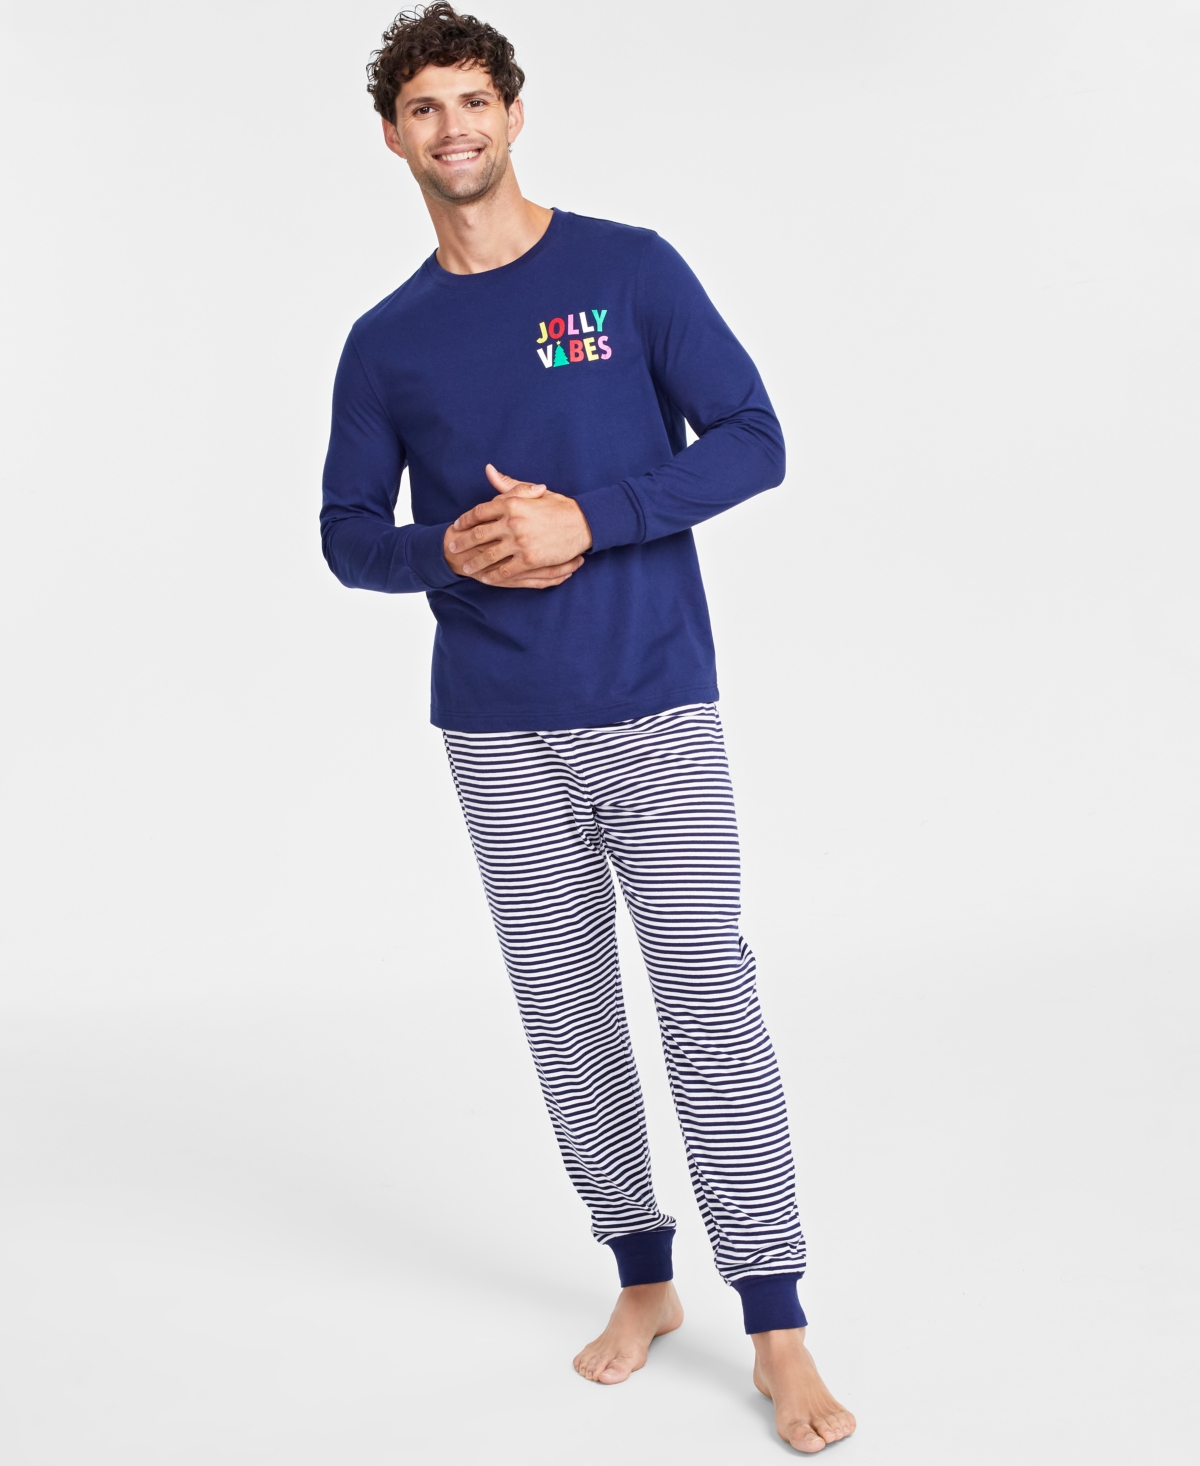 Matching Family Pajamas Men's Mix It Jolly Vibes Striped Pajamas Set, Created for Macy's - Navy Stripe